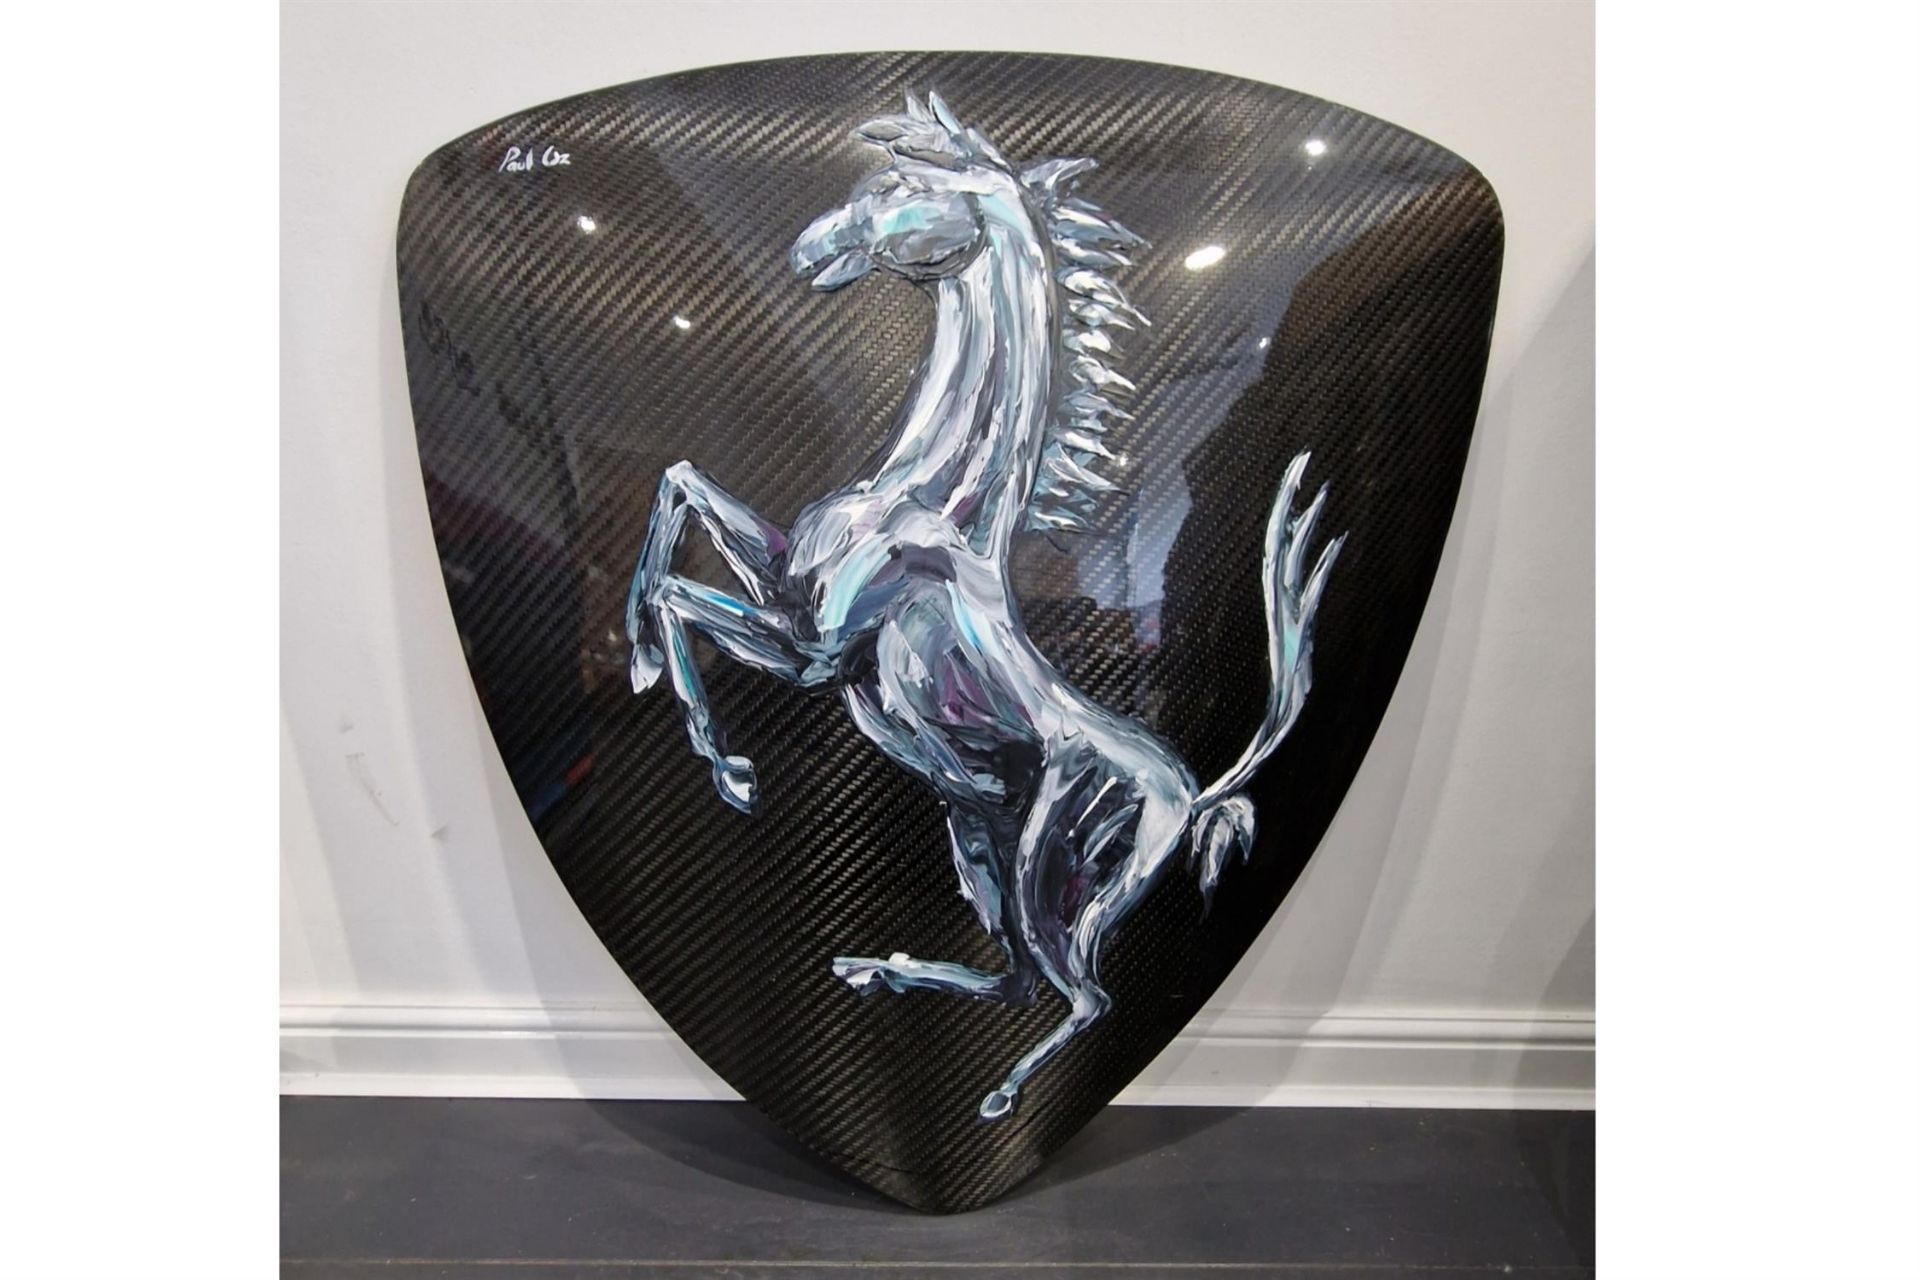 Original Prancing Horse on Carbon Fibre Sheild Artwork by Paul Oz - Image 4 of 7